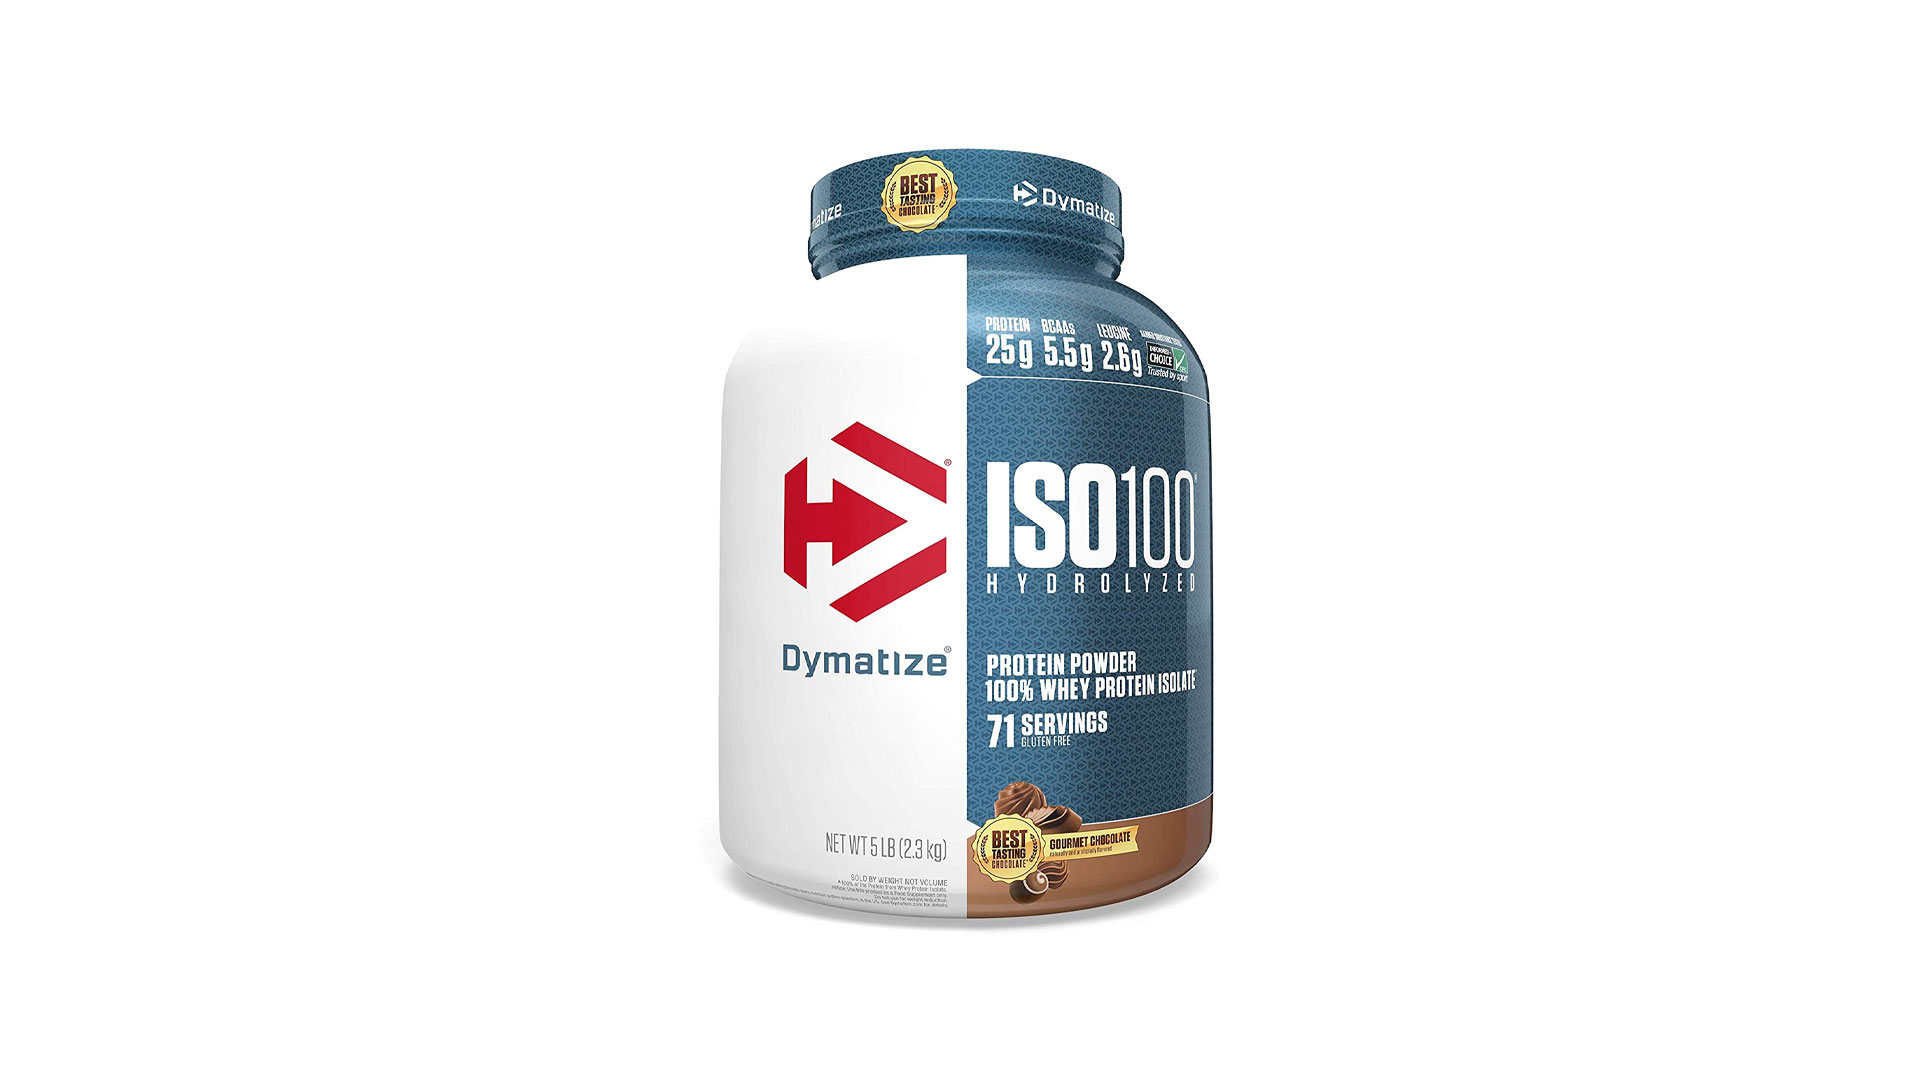 Best protein powder: Dymatize